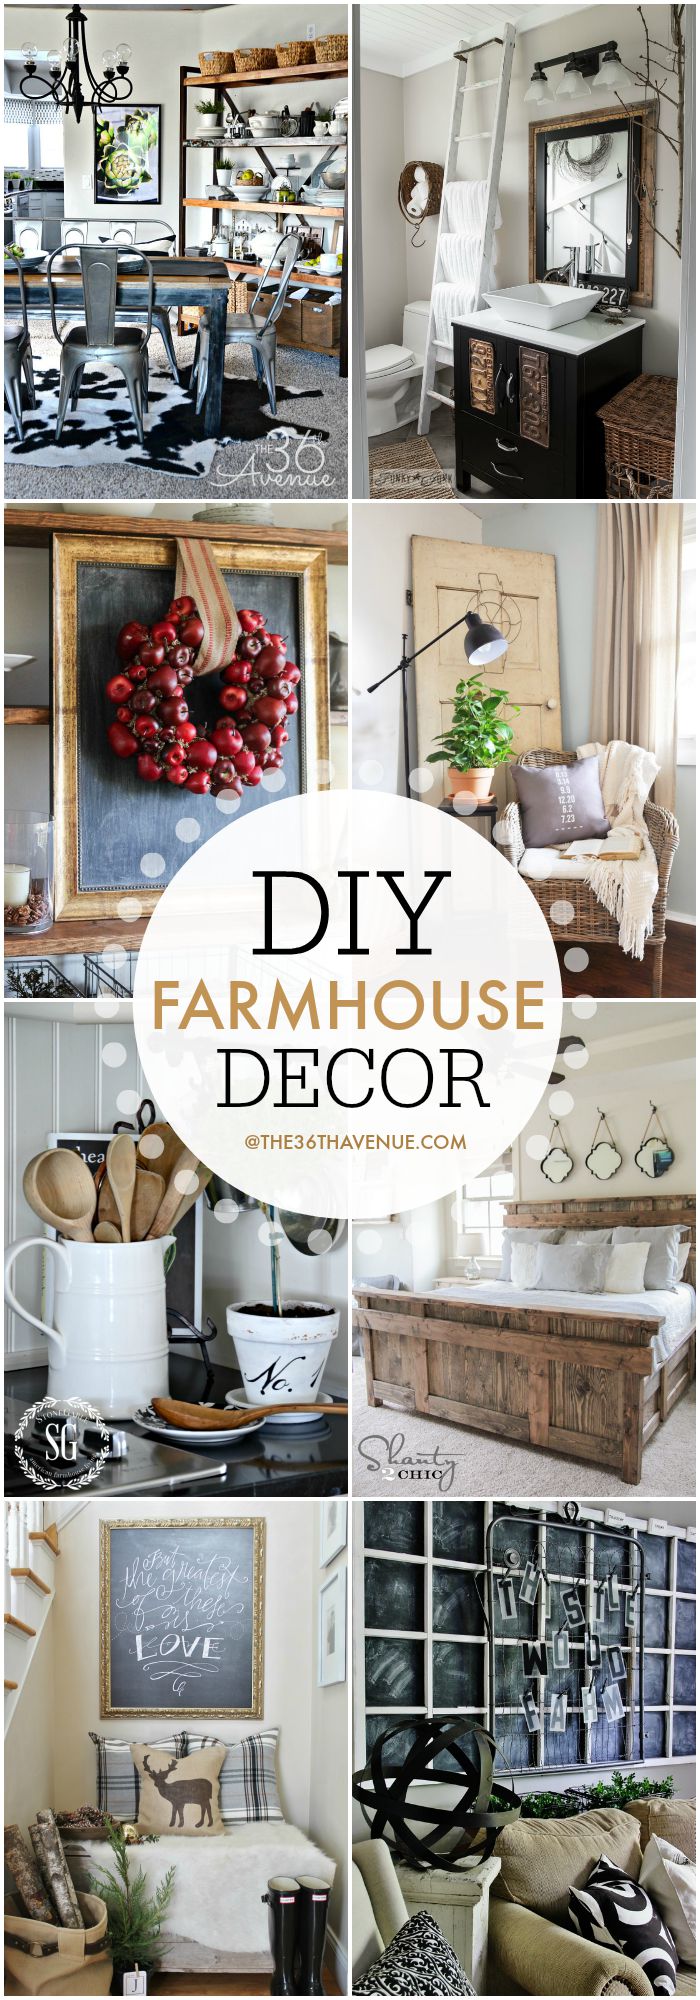 Home Decor - DIY Farmhouse Decor Ideas at the36thavenue.com Super cute ways to decorate your home! 